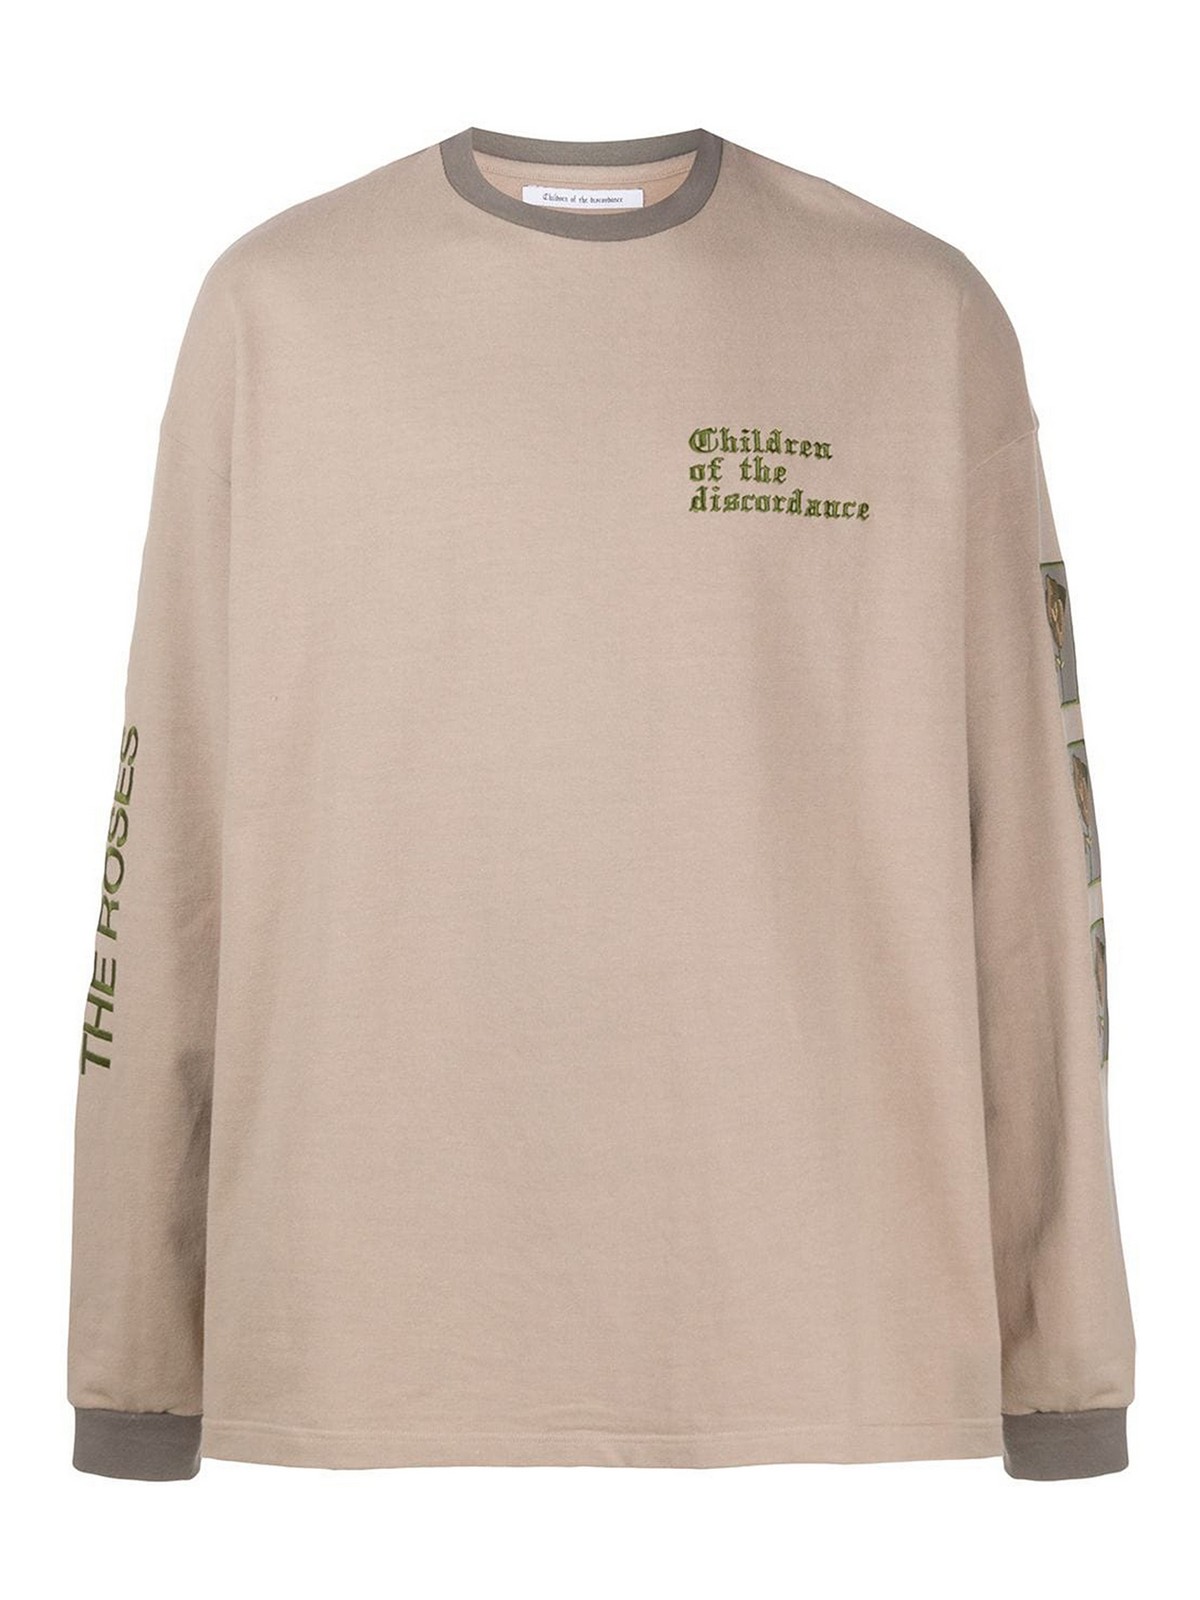 Children Of The Discordance Cotton Embroidered Sweatshirt In Light Brown